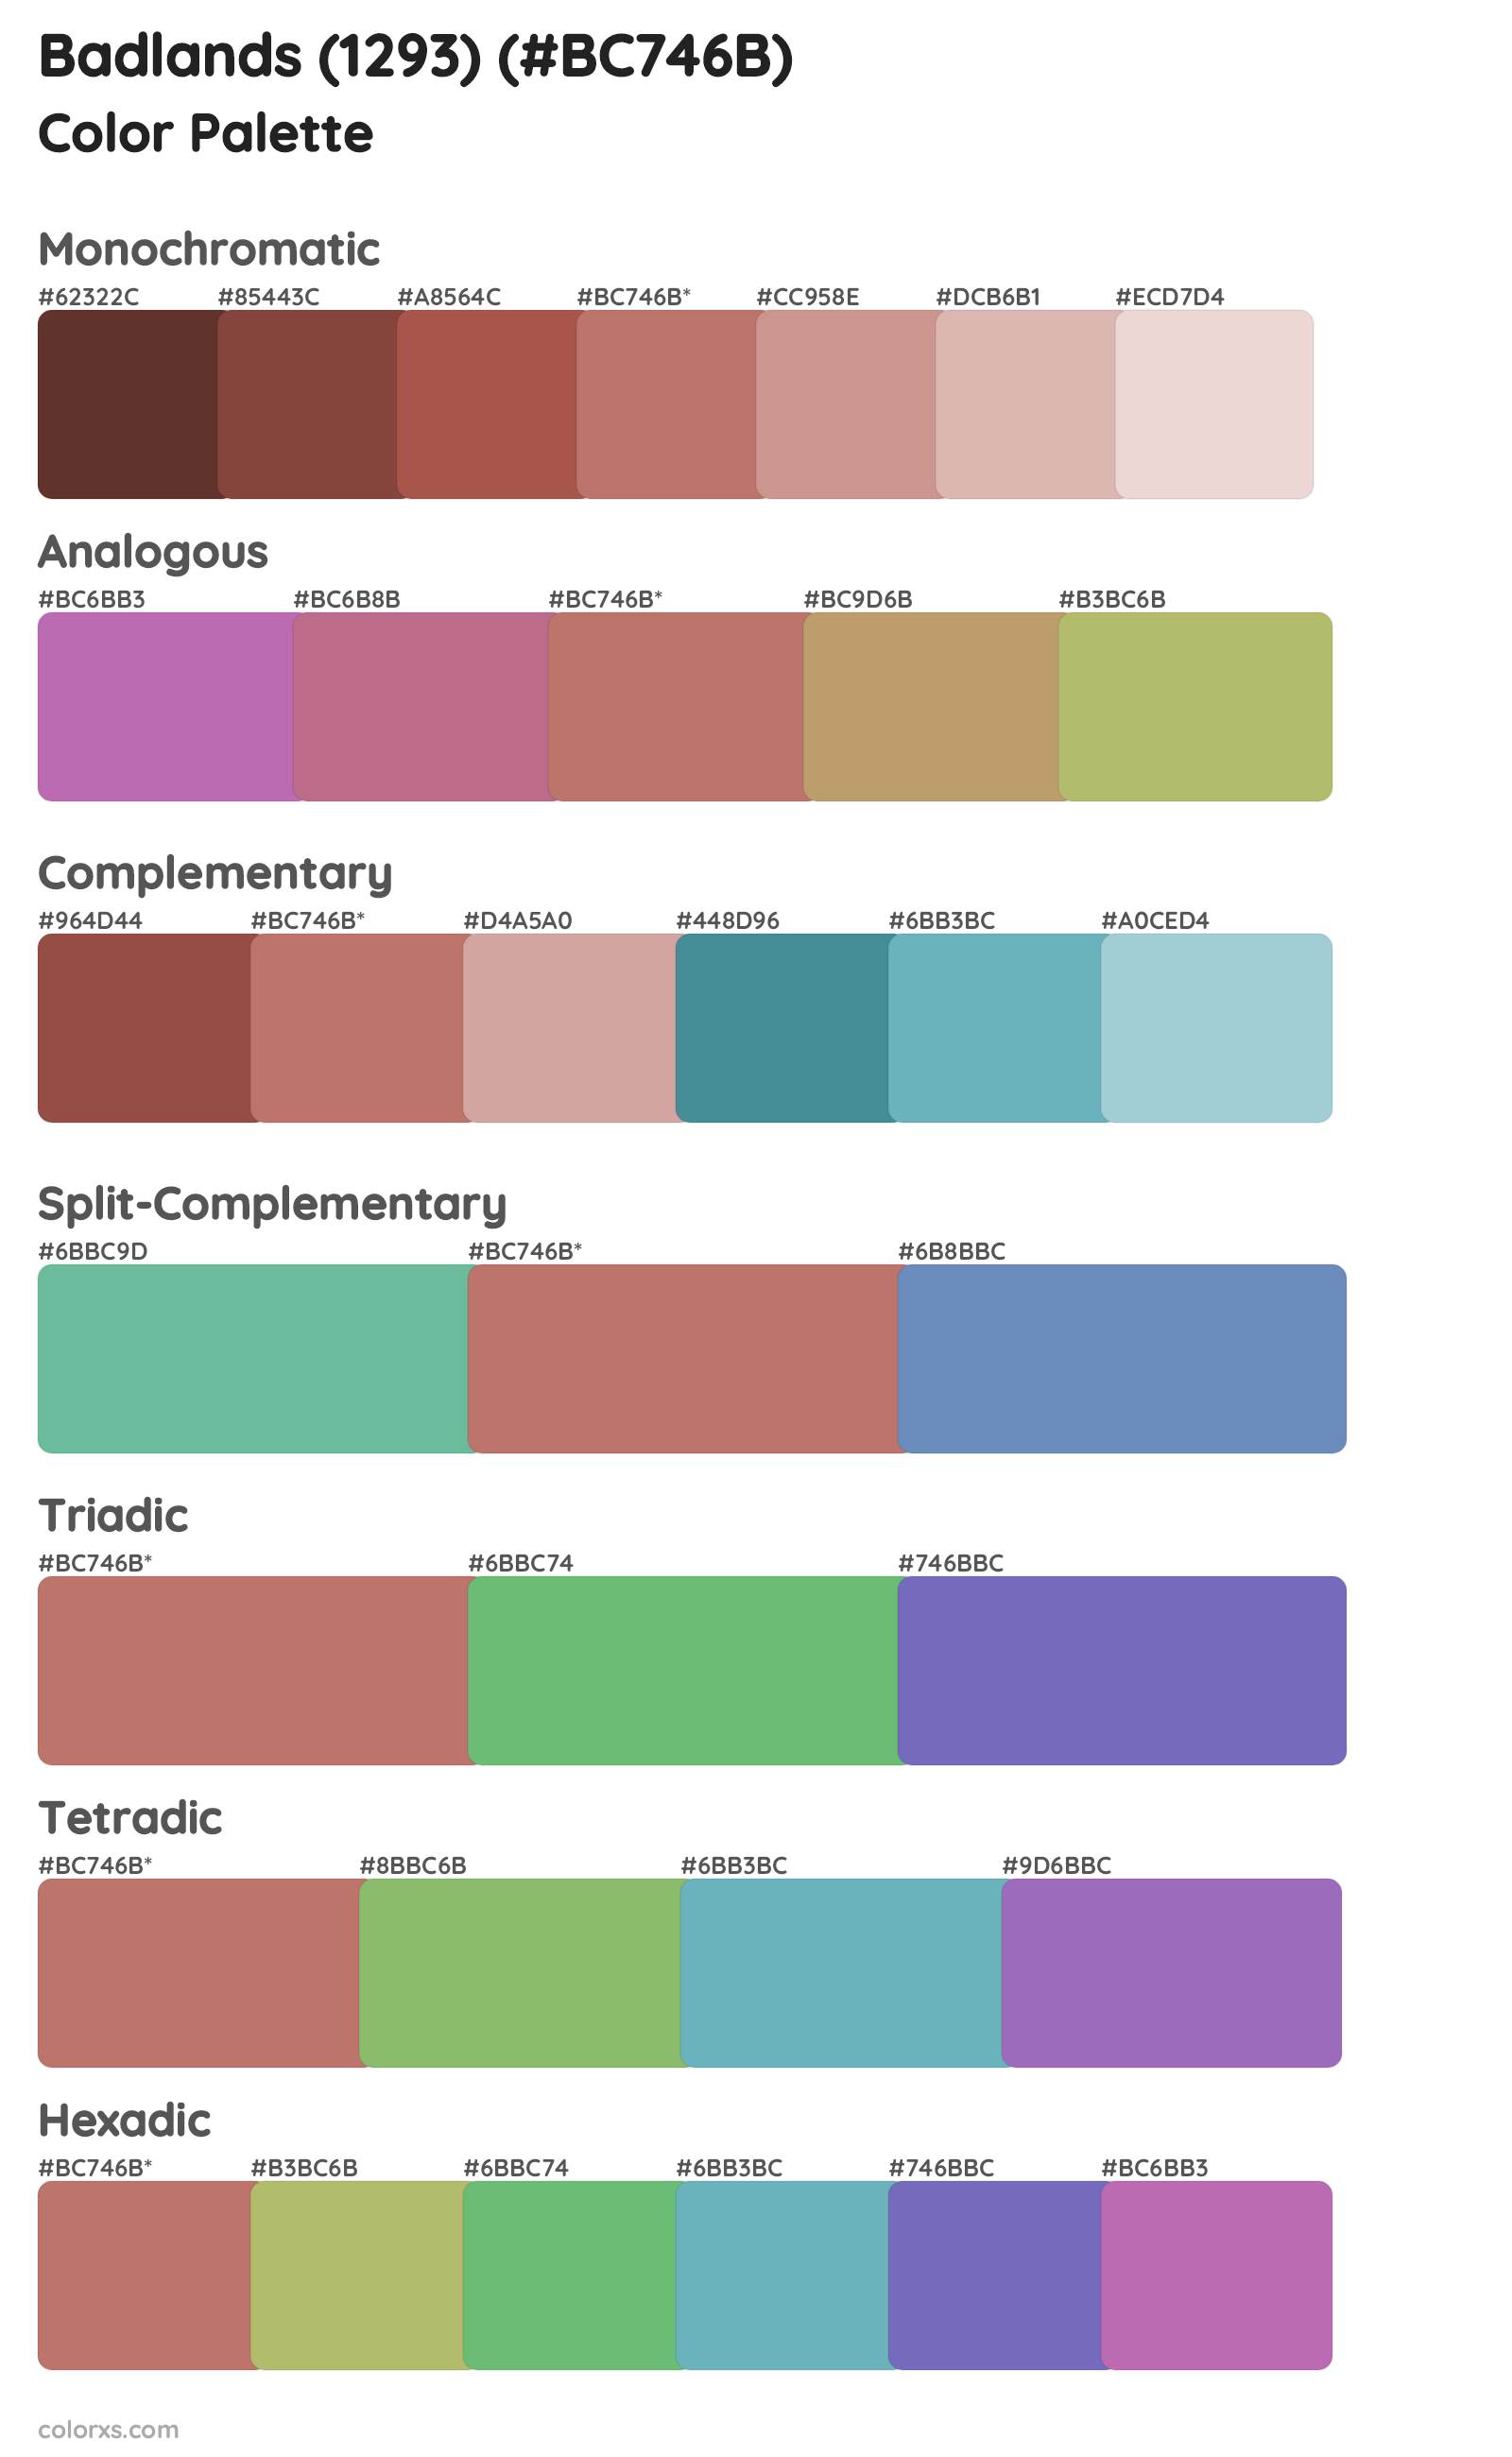 Badlands (1293) Color Scheme Palettes